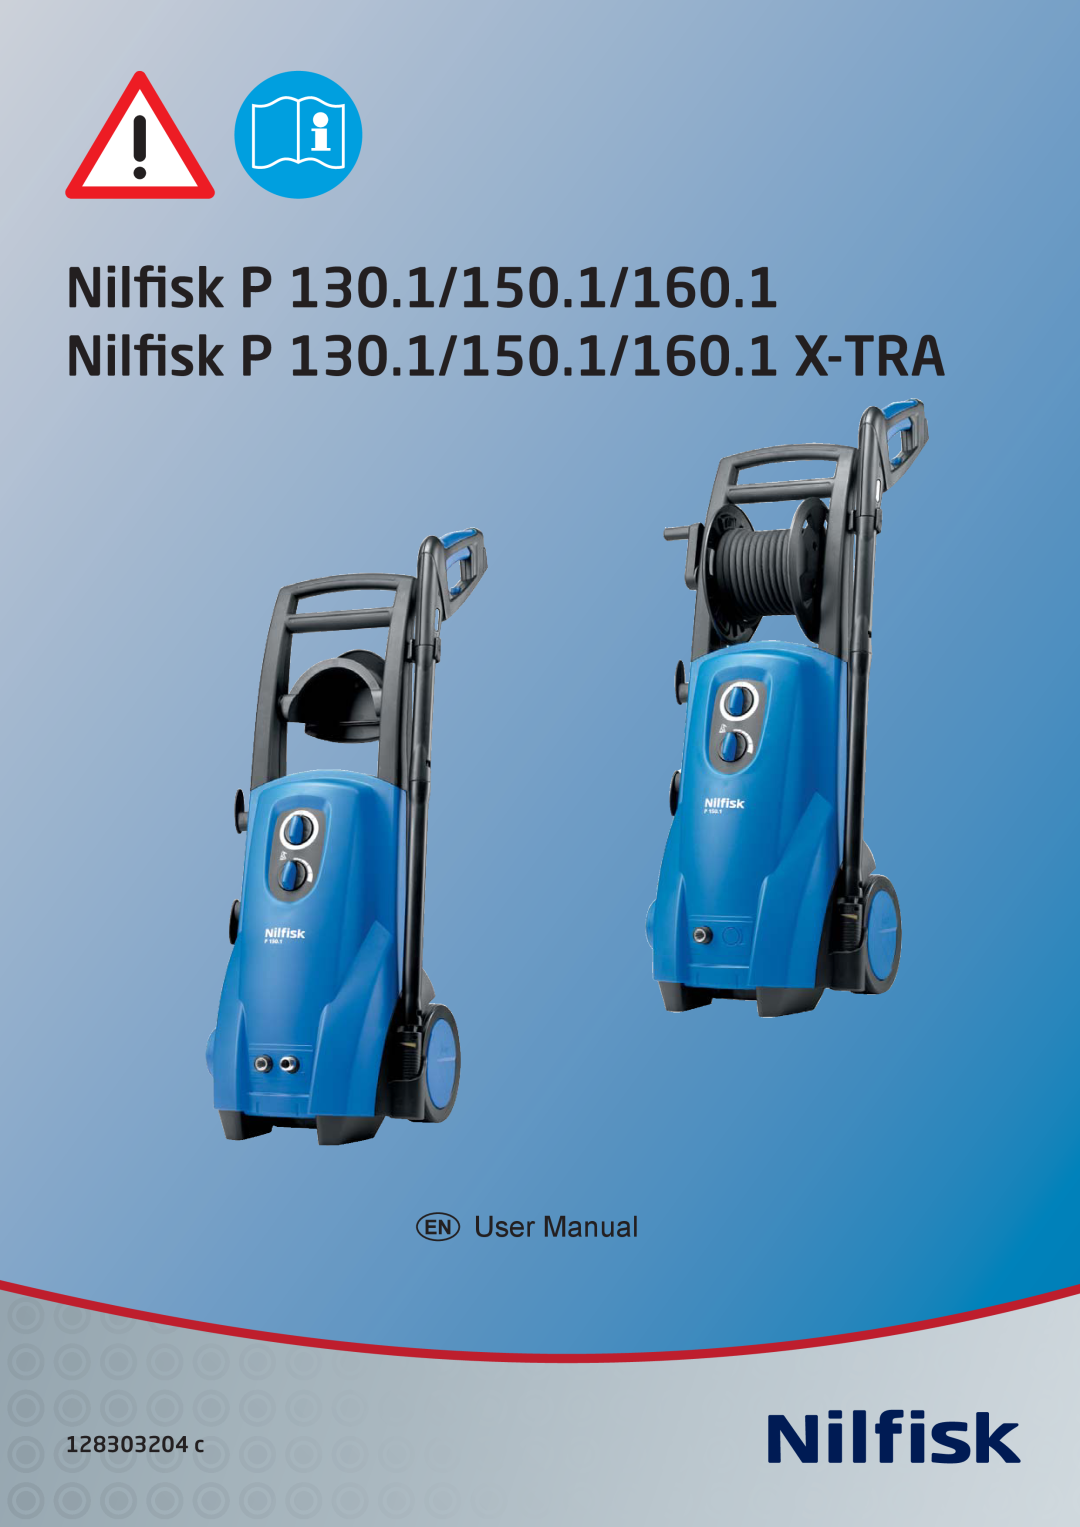 Nilfisk-Advance America P 130.1, P 150.1 user manual 128303204 c 